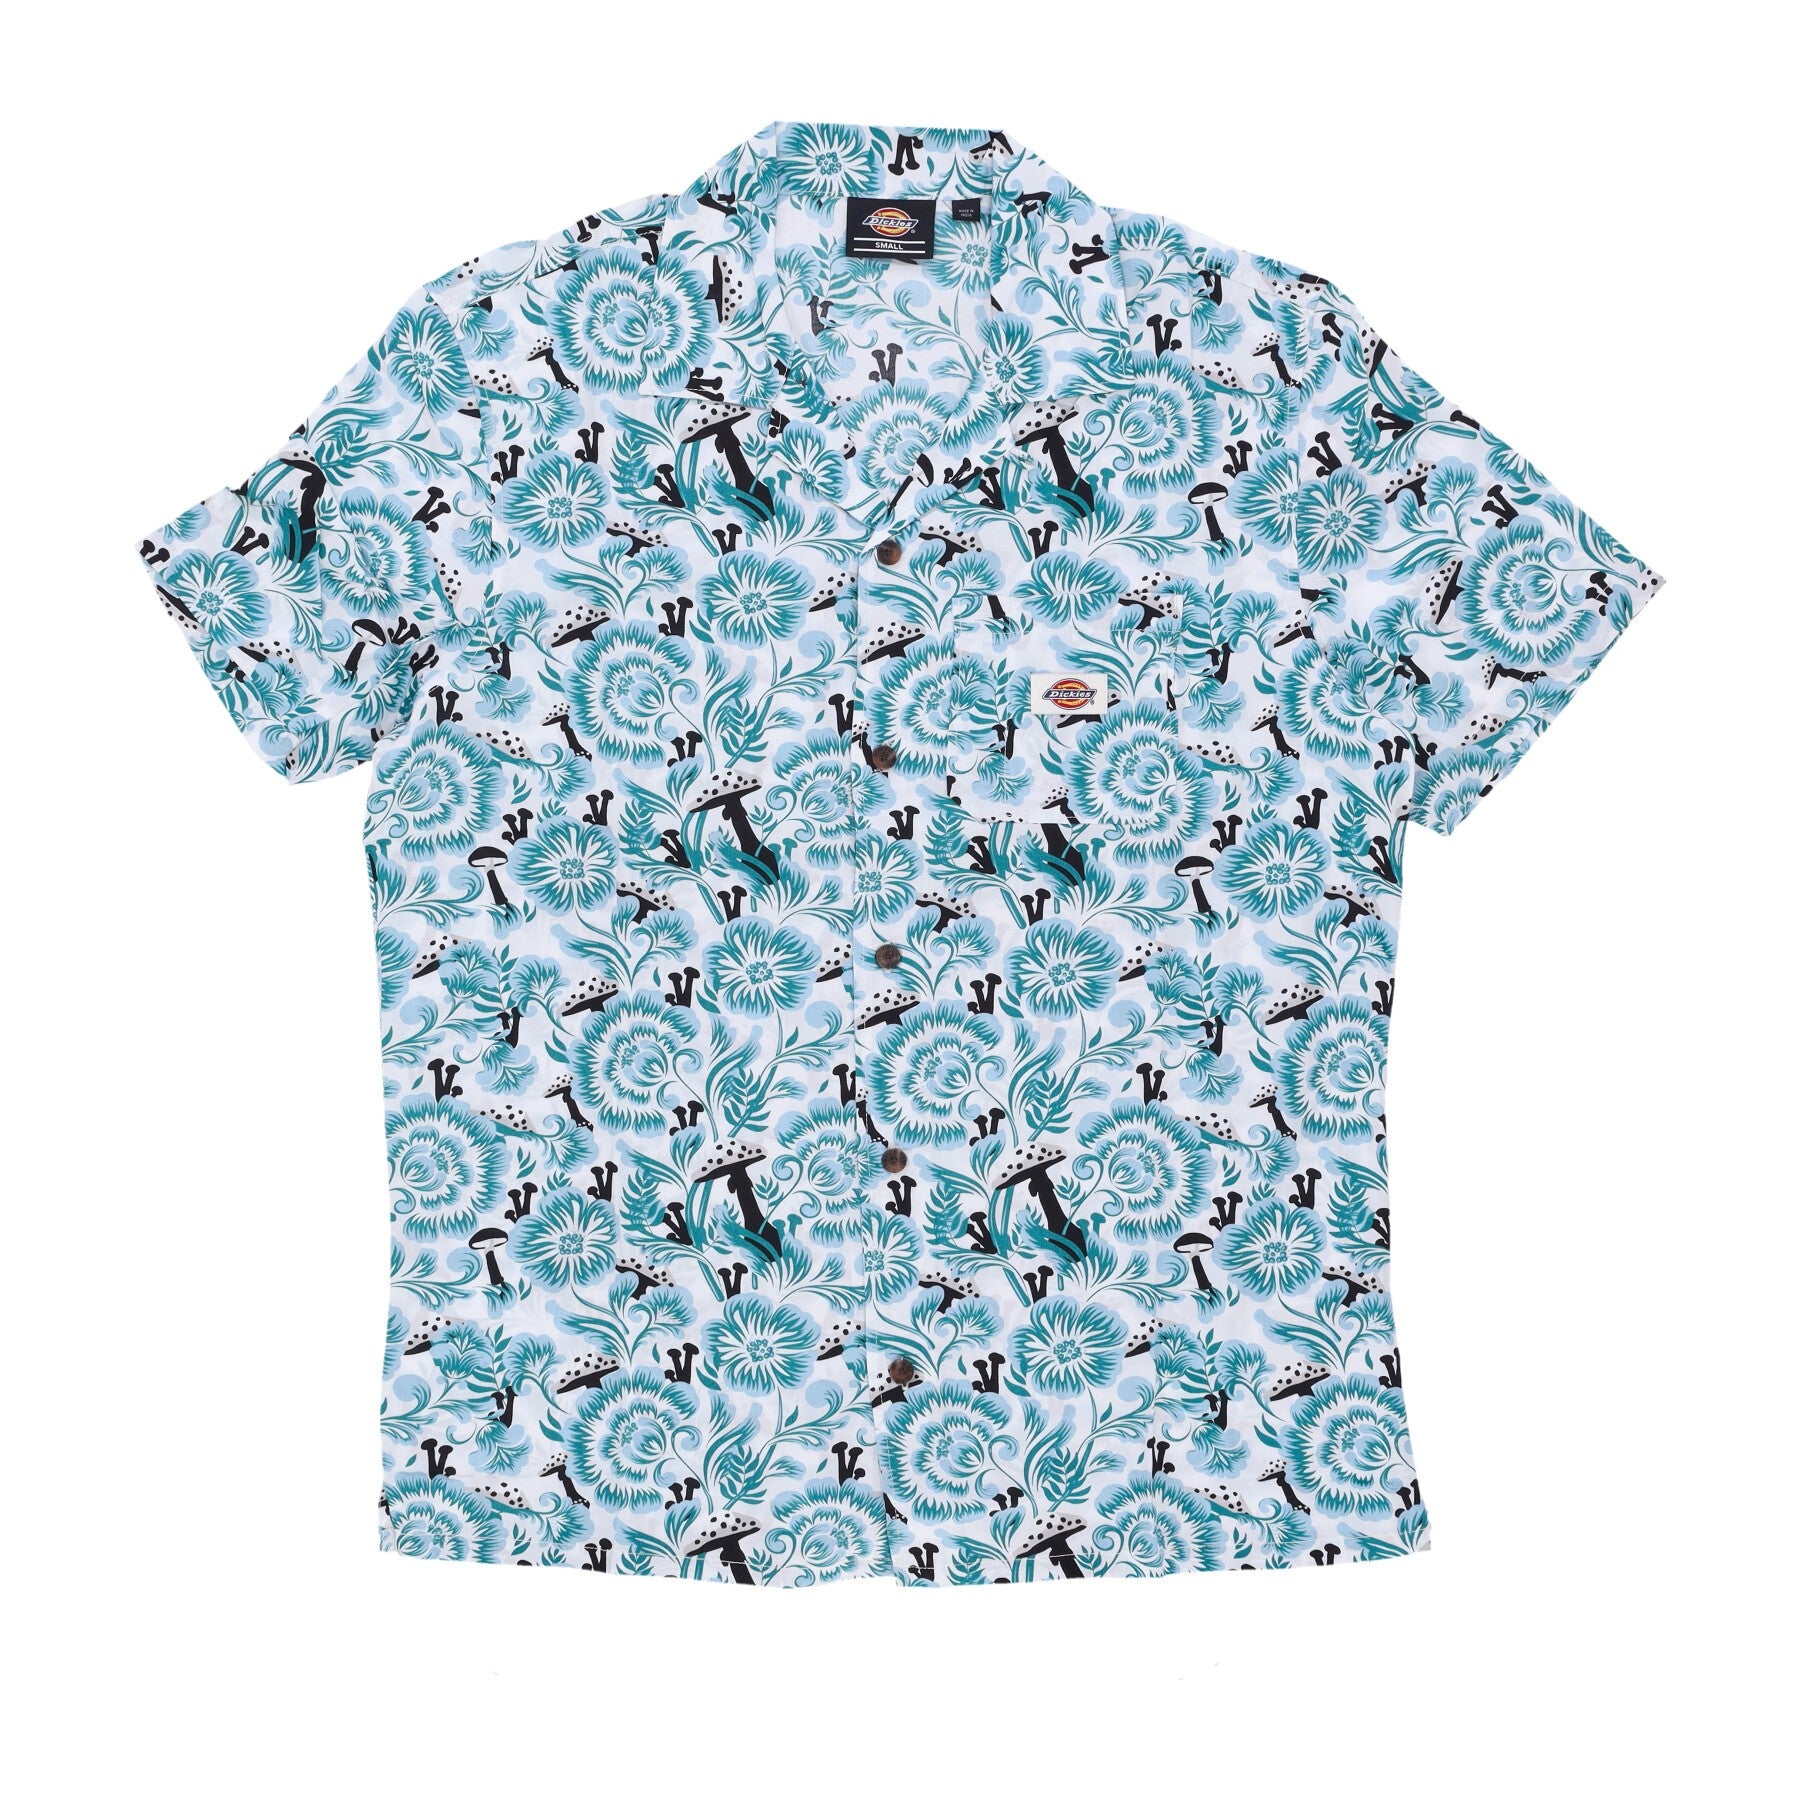 Roseburg Men's Short Sleeve Shirt S/s Shirt Cloud Floral